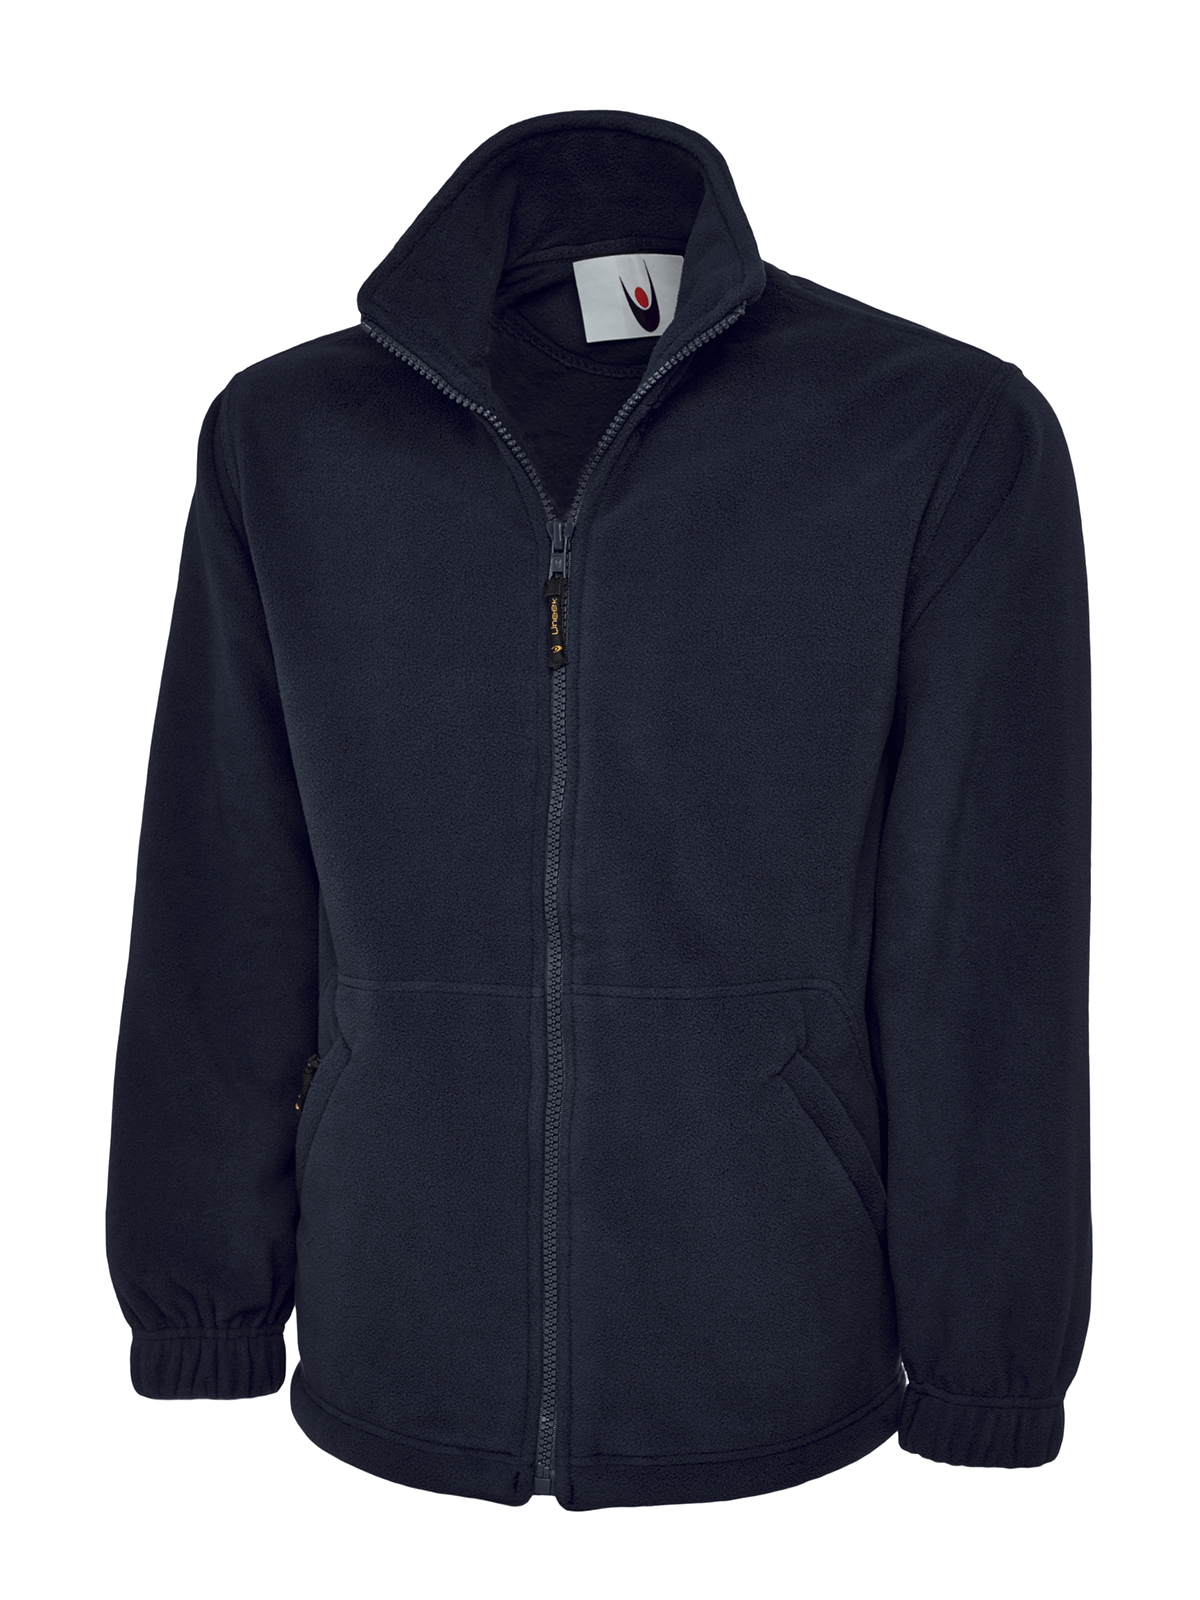 Full Zip Fleece Jacket, Navy - Size Large